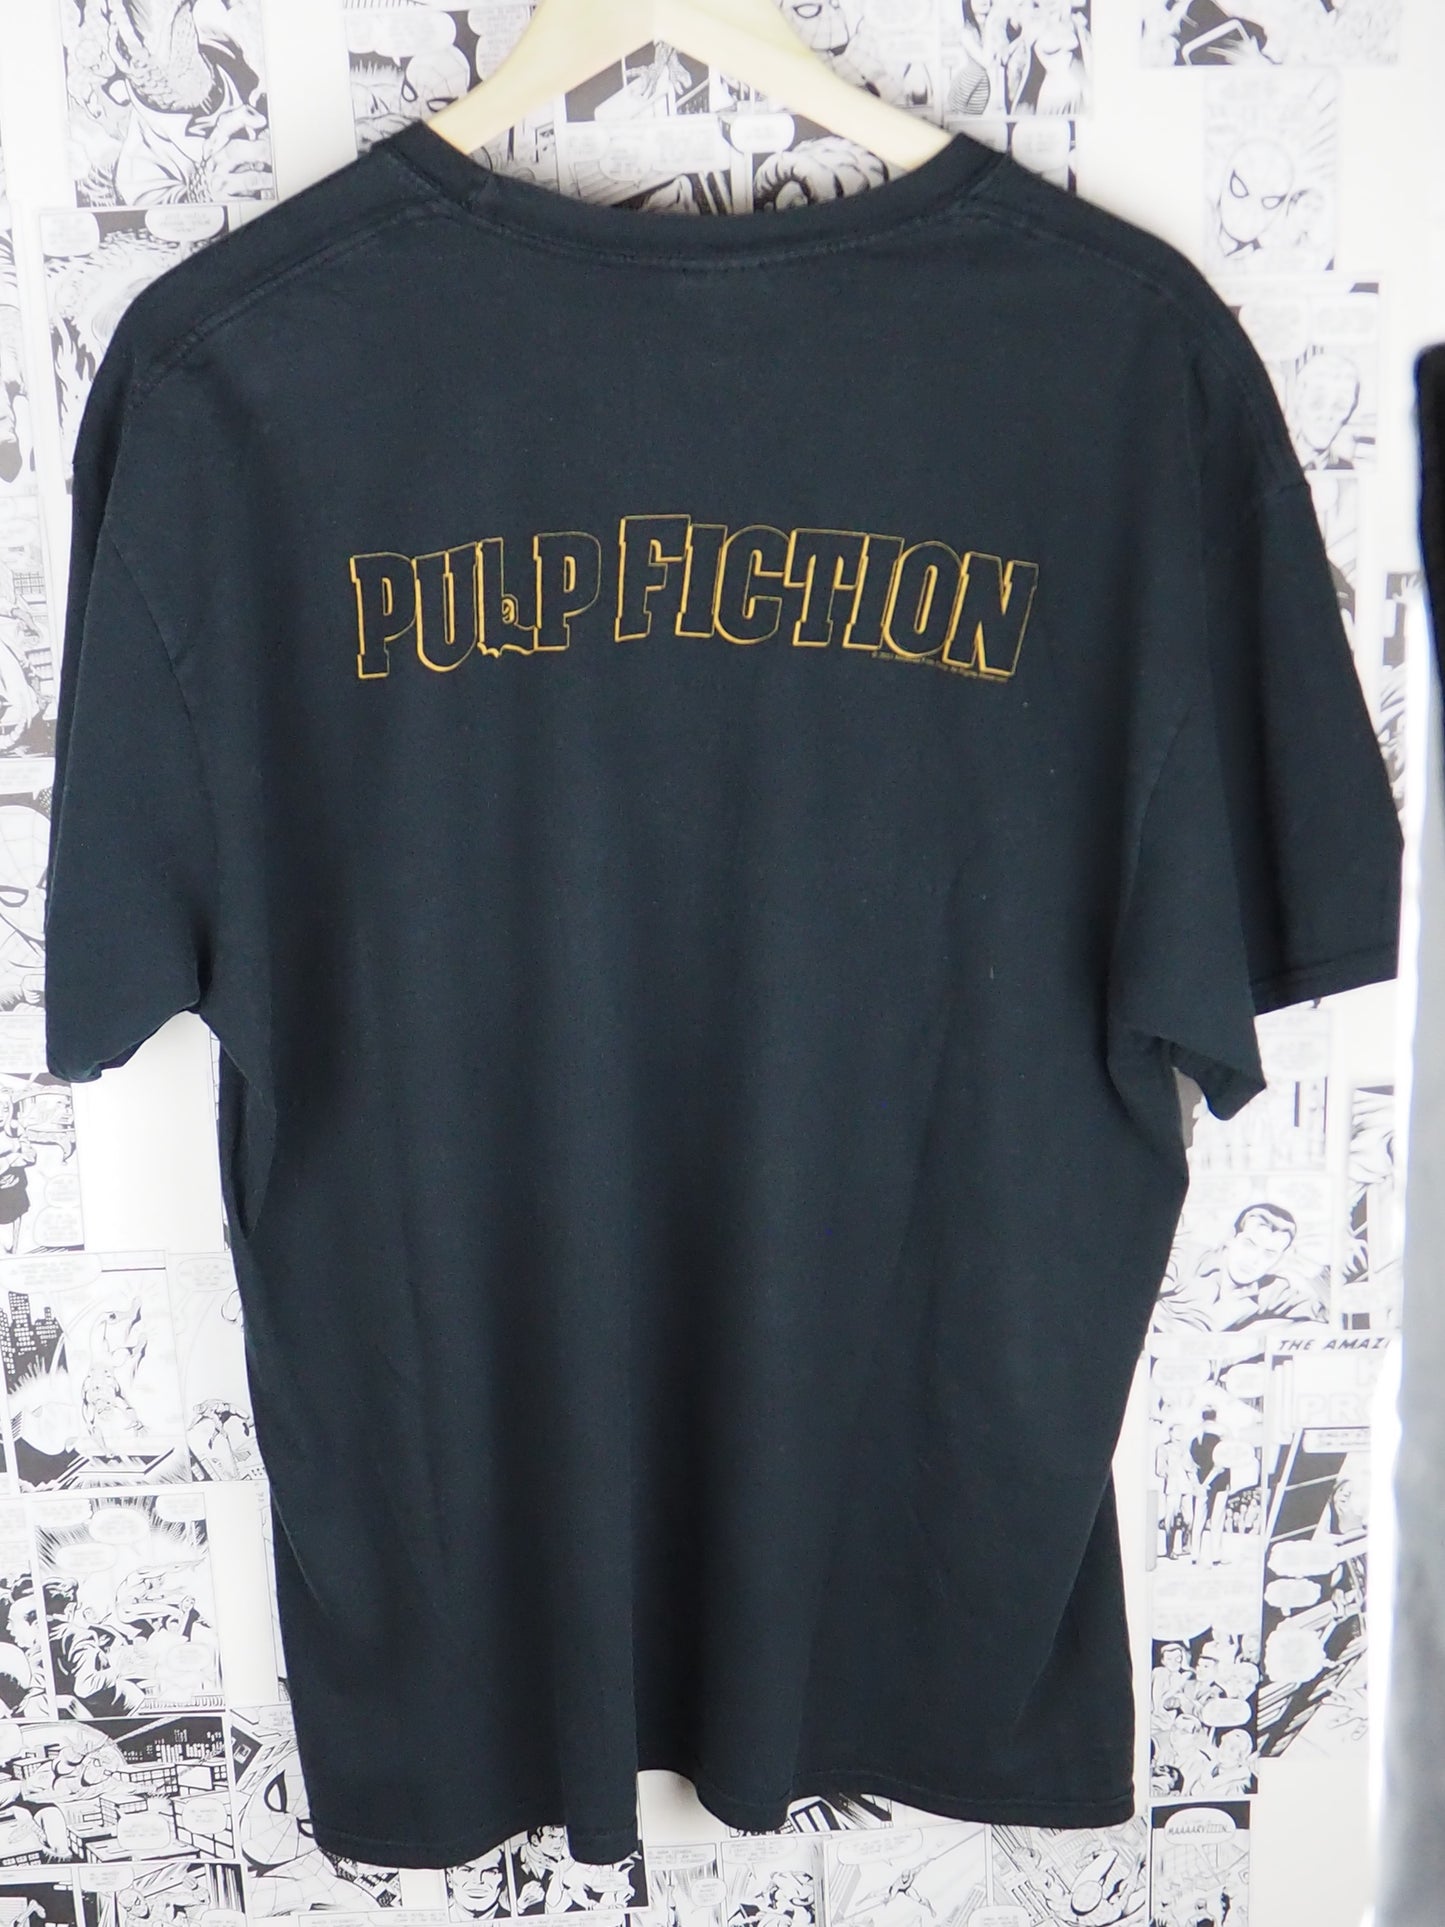 Vintage Pulp Fiction "Bad Motherfucker" t-shirt - size XL